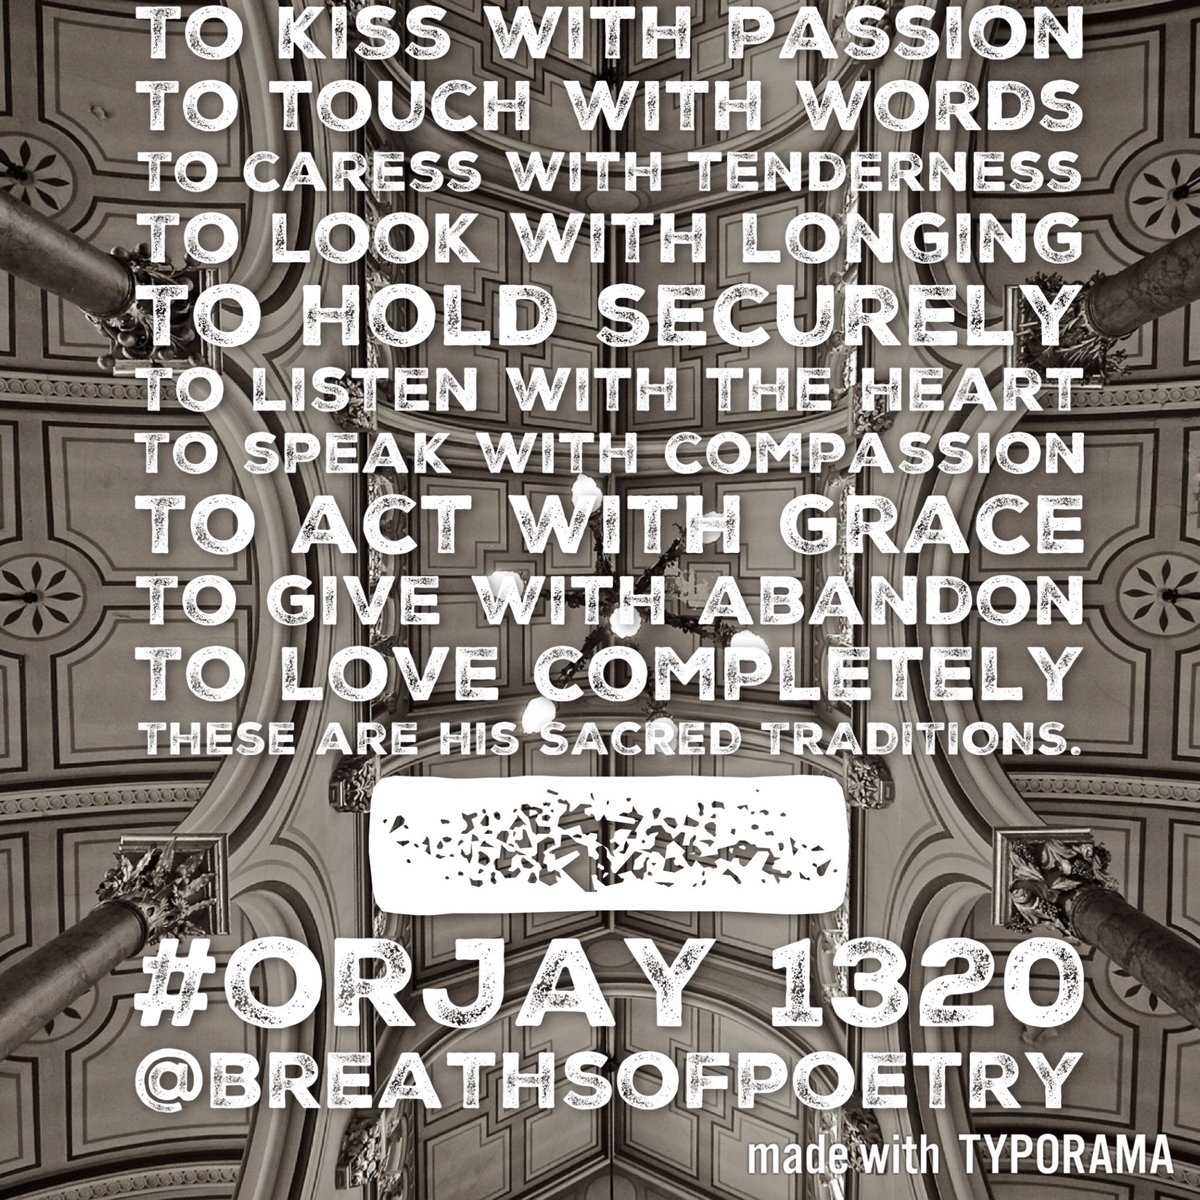 Sacred Transitions
#orjay 1320
#passion
#abandon
#sacredtraditions
#breathsofpoetry